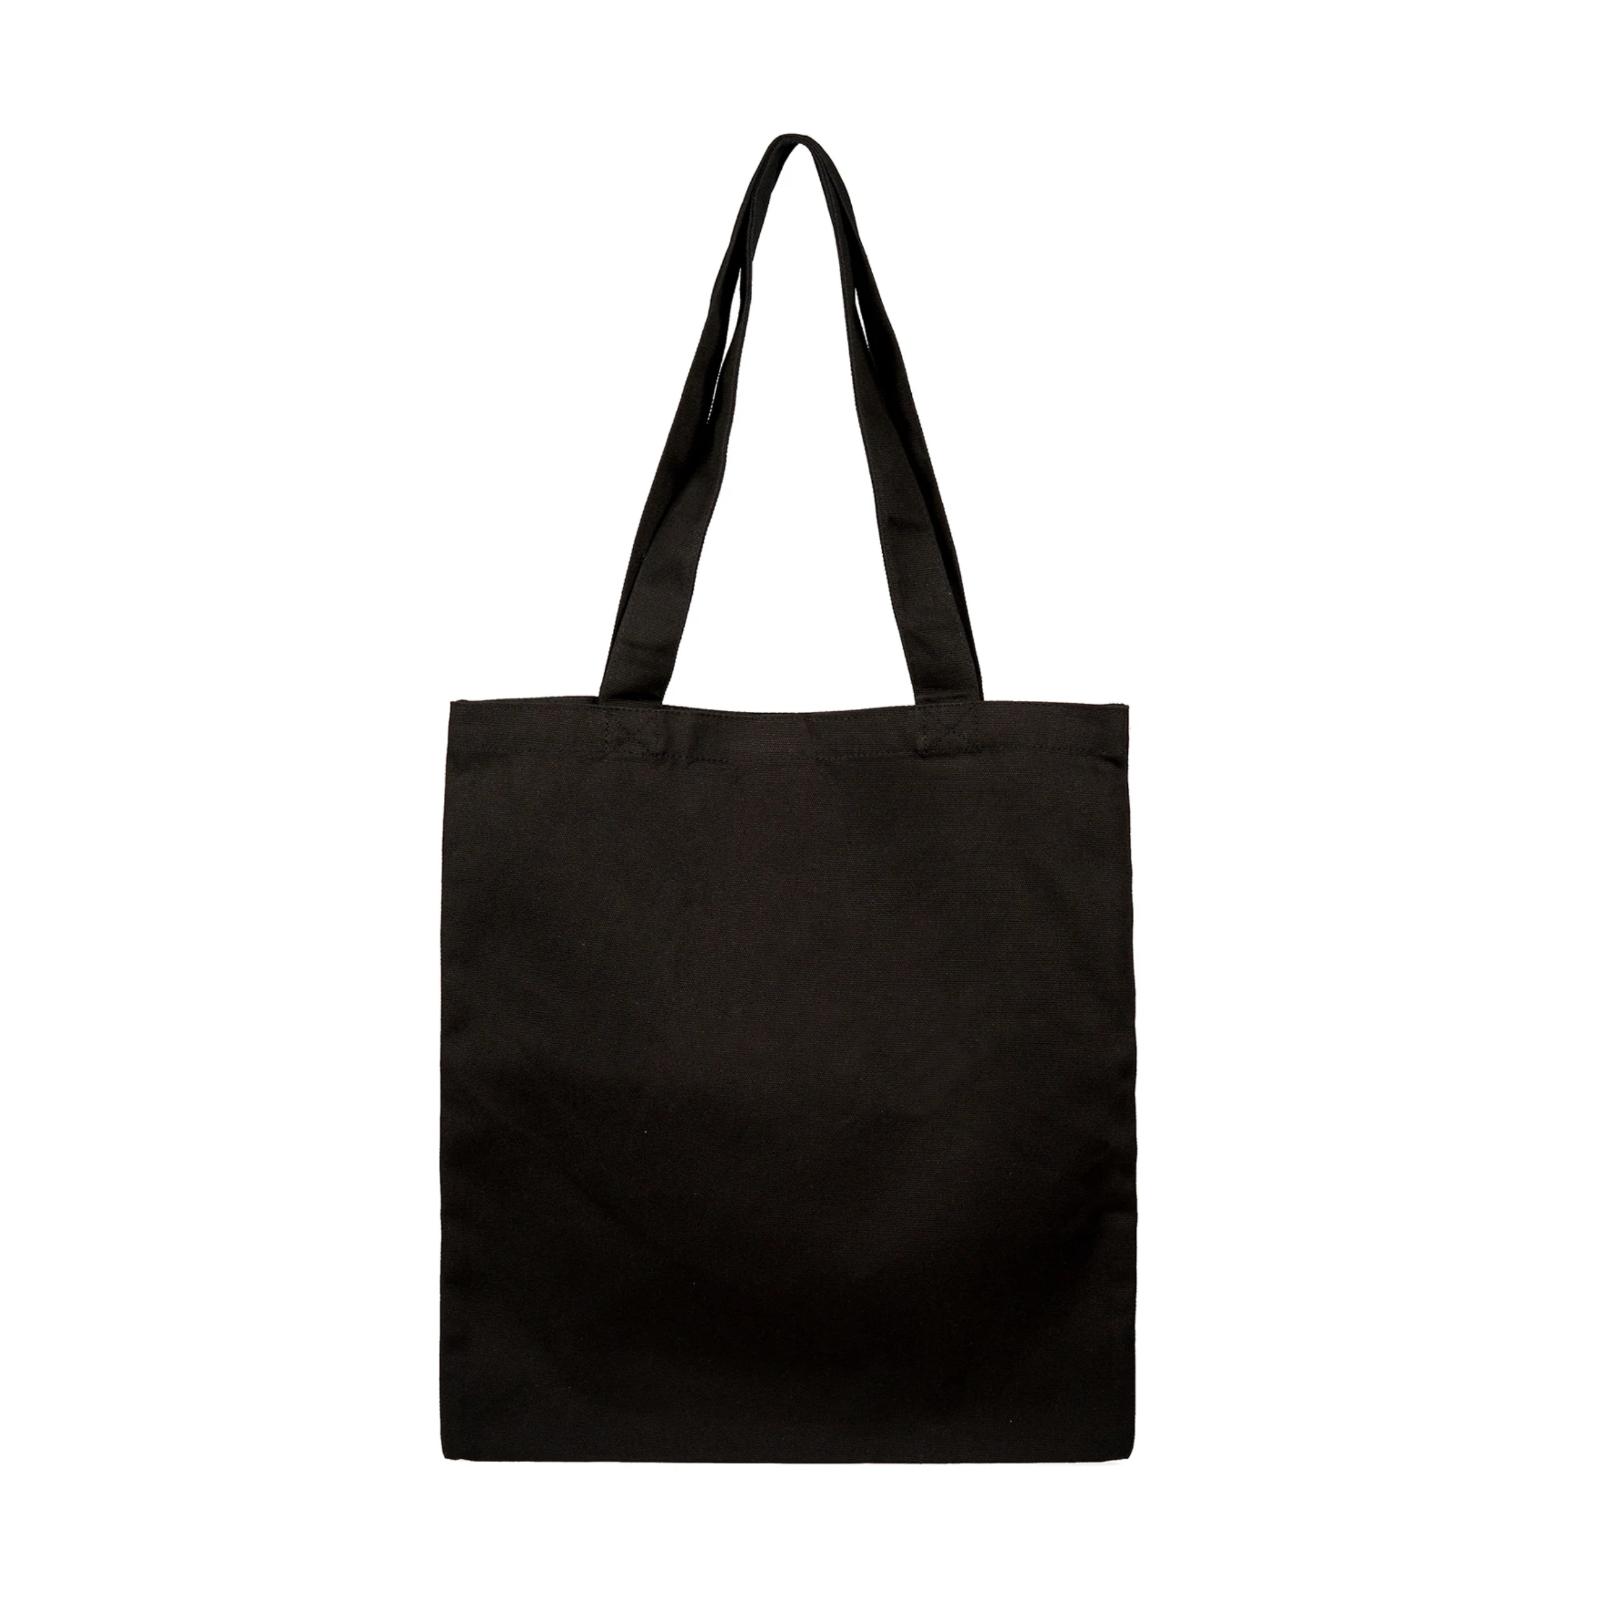 Shop Debenhams Women's Large Tote Bags up to 80% Off | DealDoodle